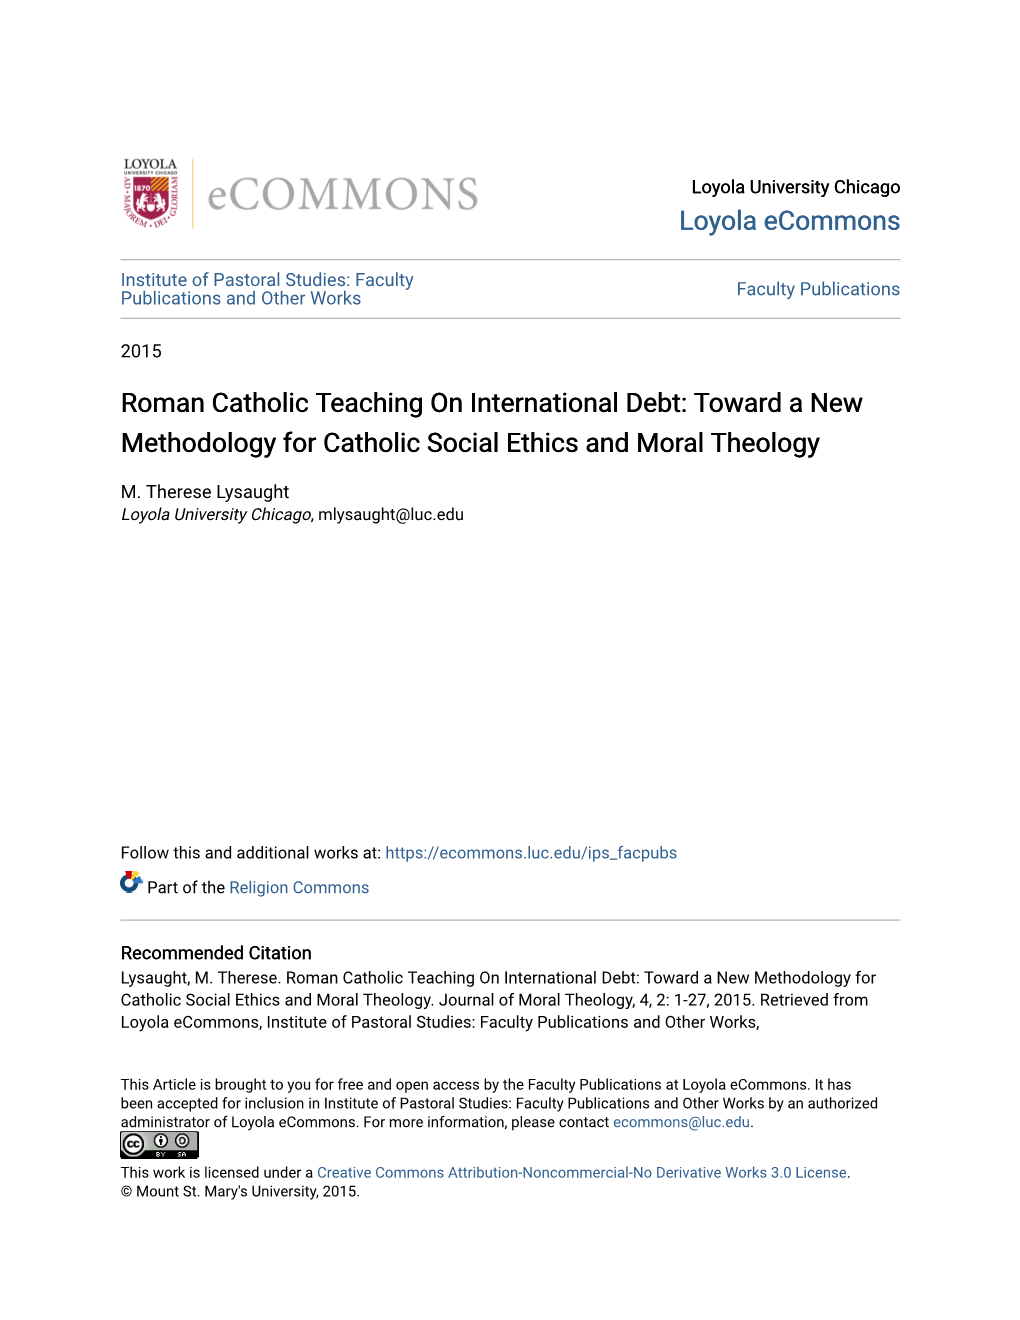 Roman Catholic Teaching on International Debt: Toward a New Methodology for Catholic Social Ethics and Moral Theology